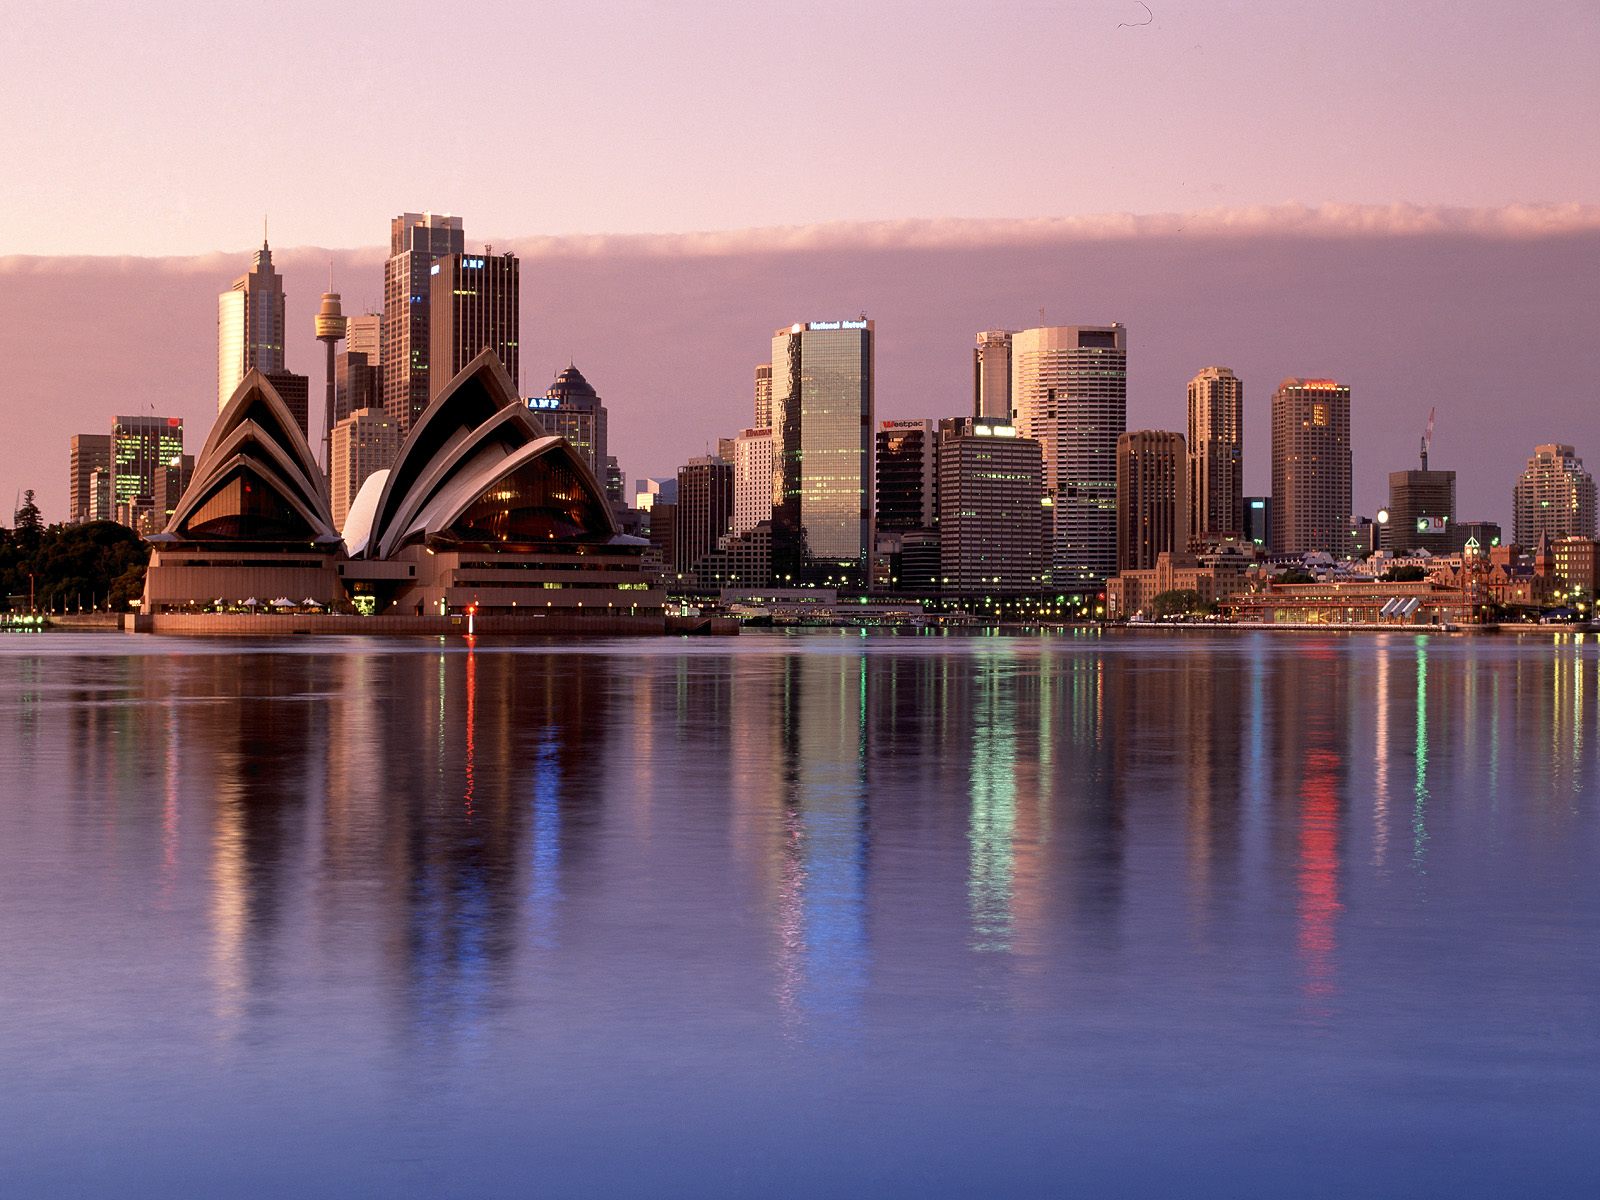 Sydney and Melbourne, Australia